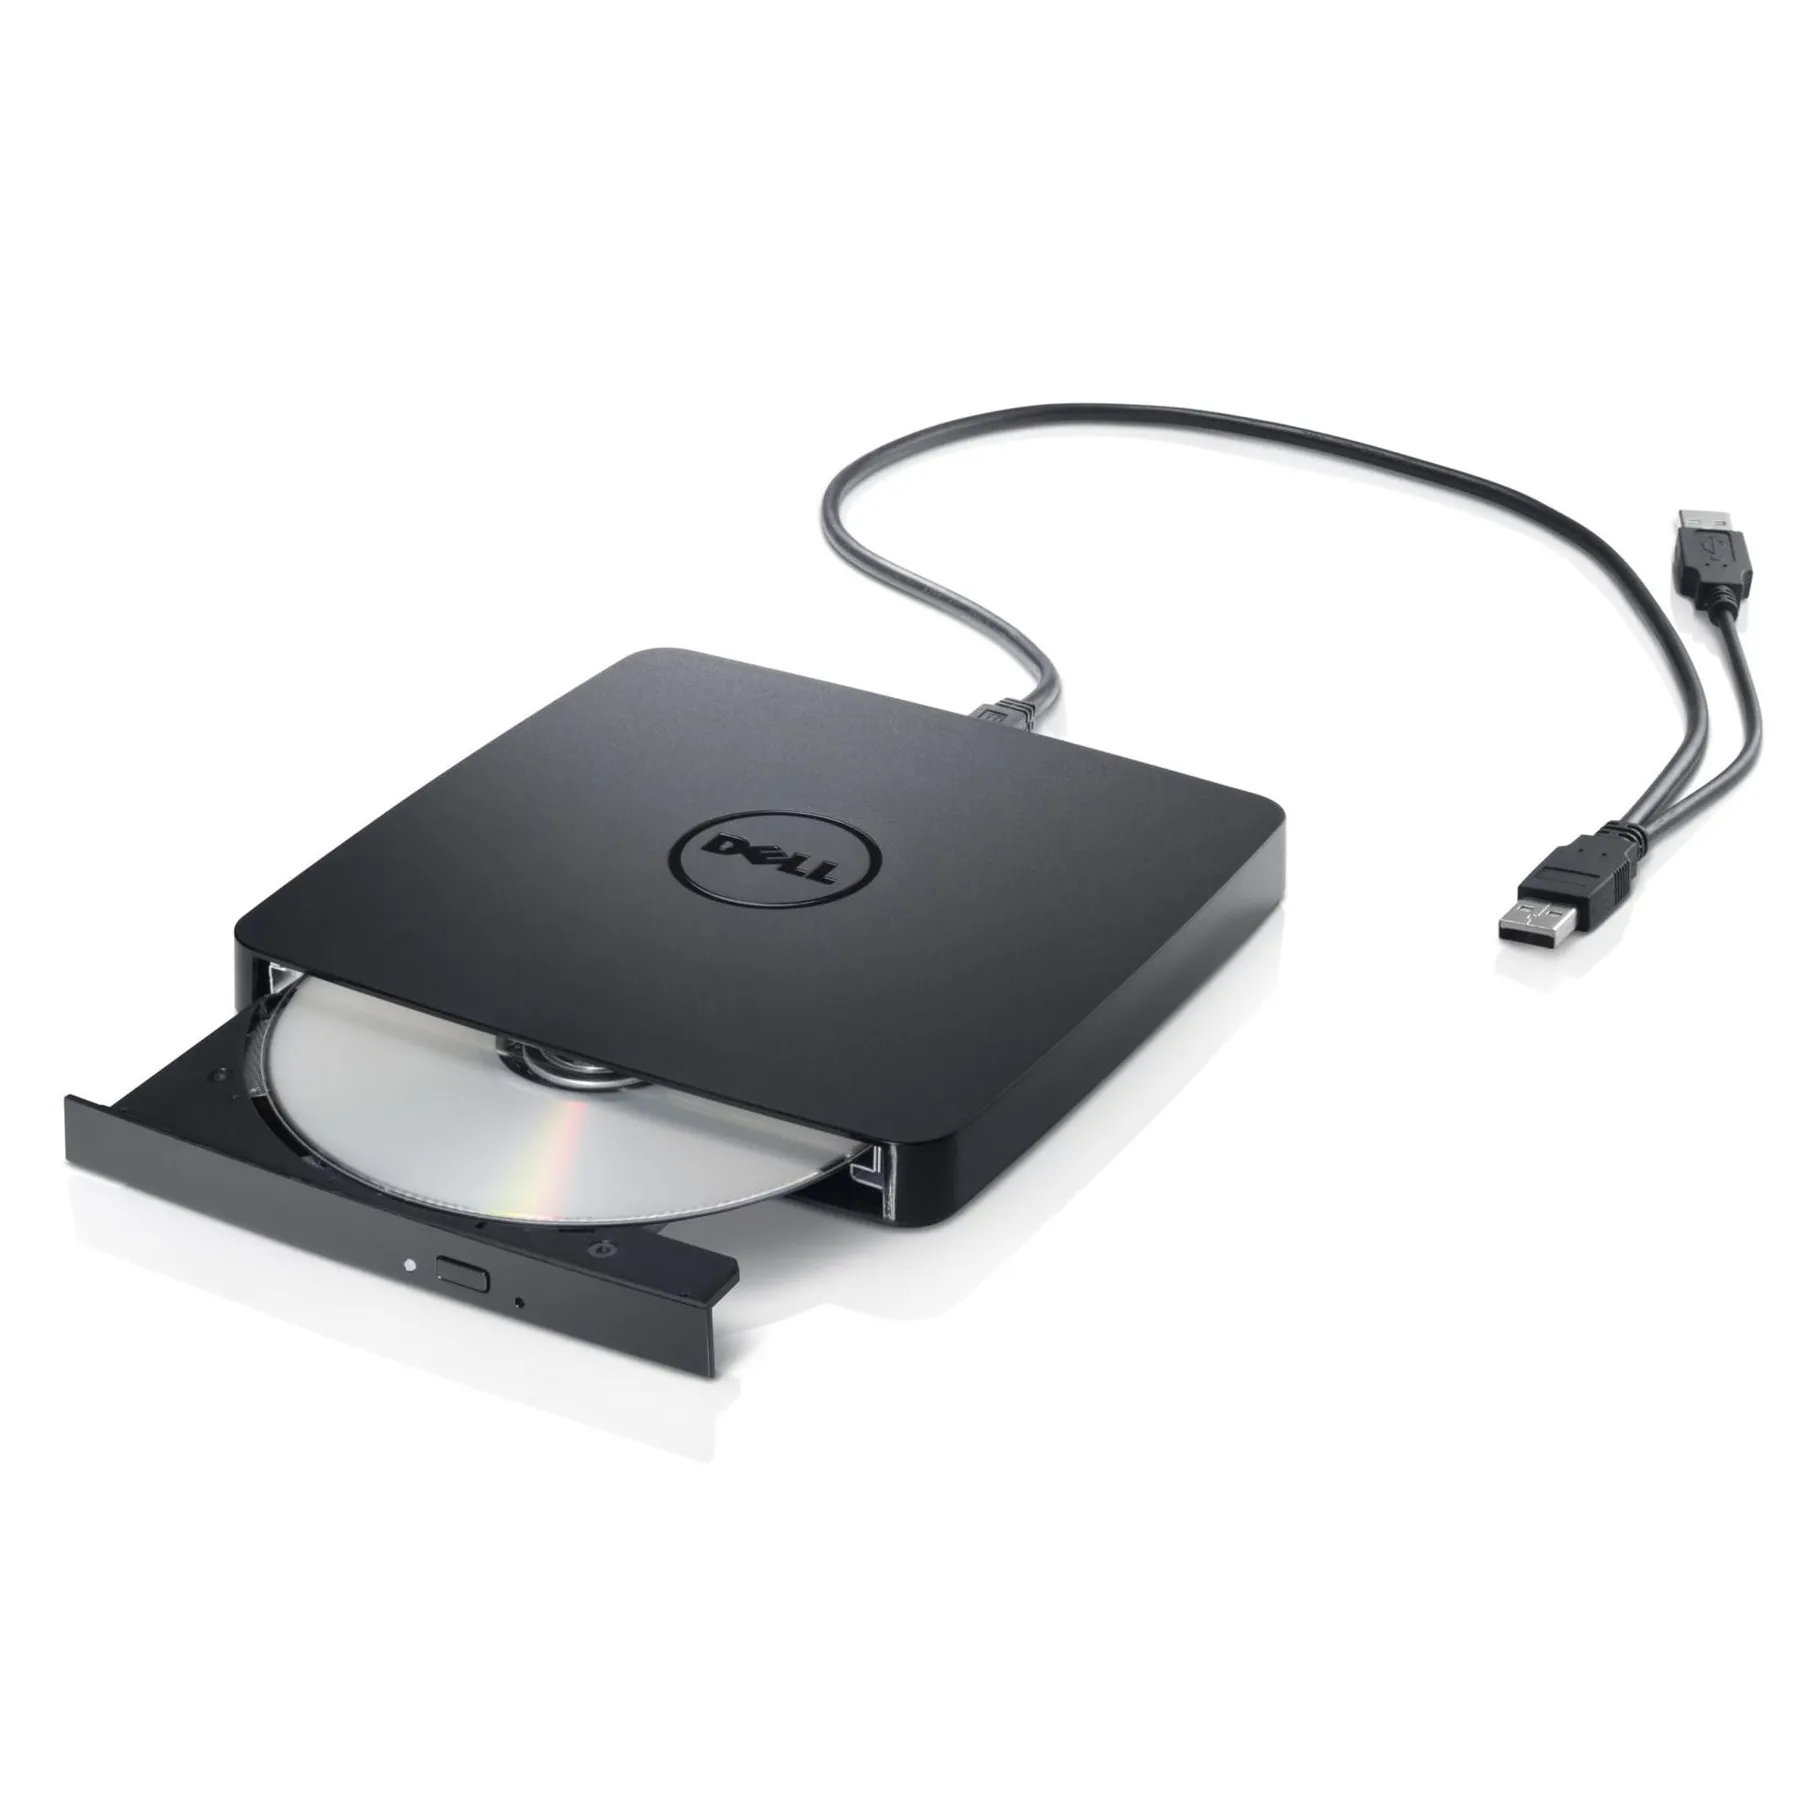 Dell USB Slim DVD RW Drive - DW316